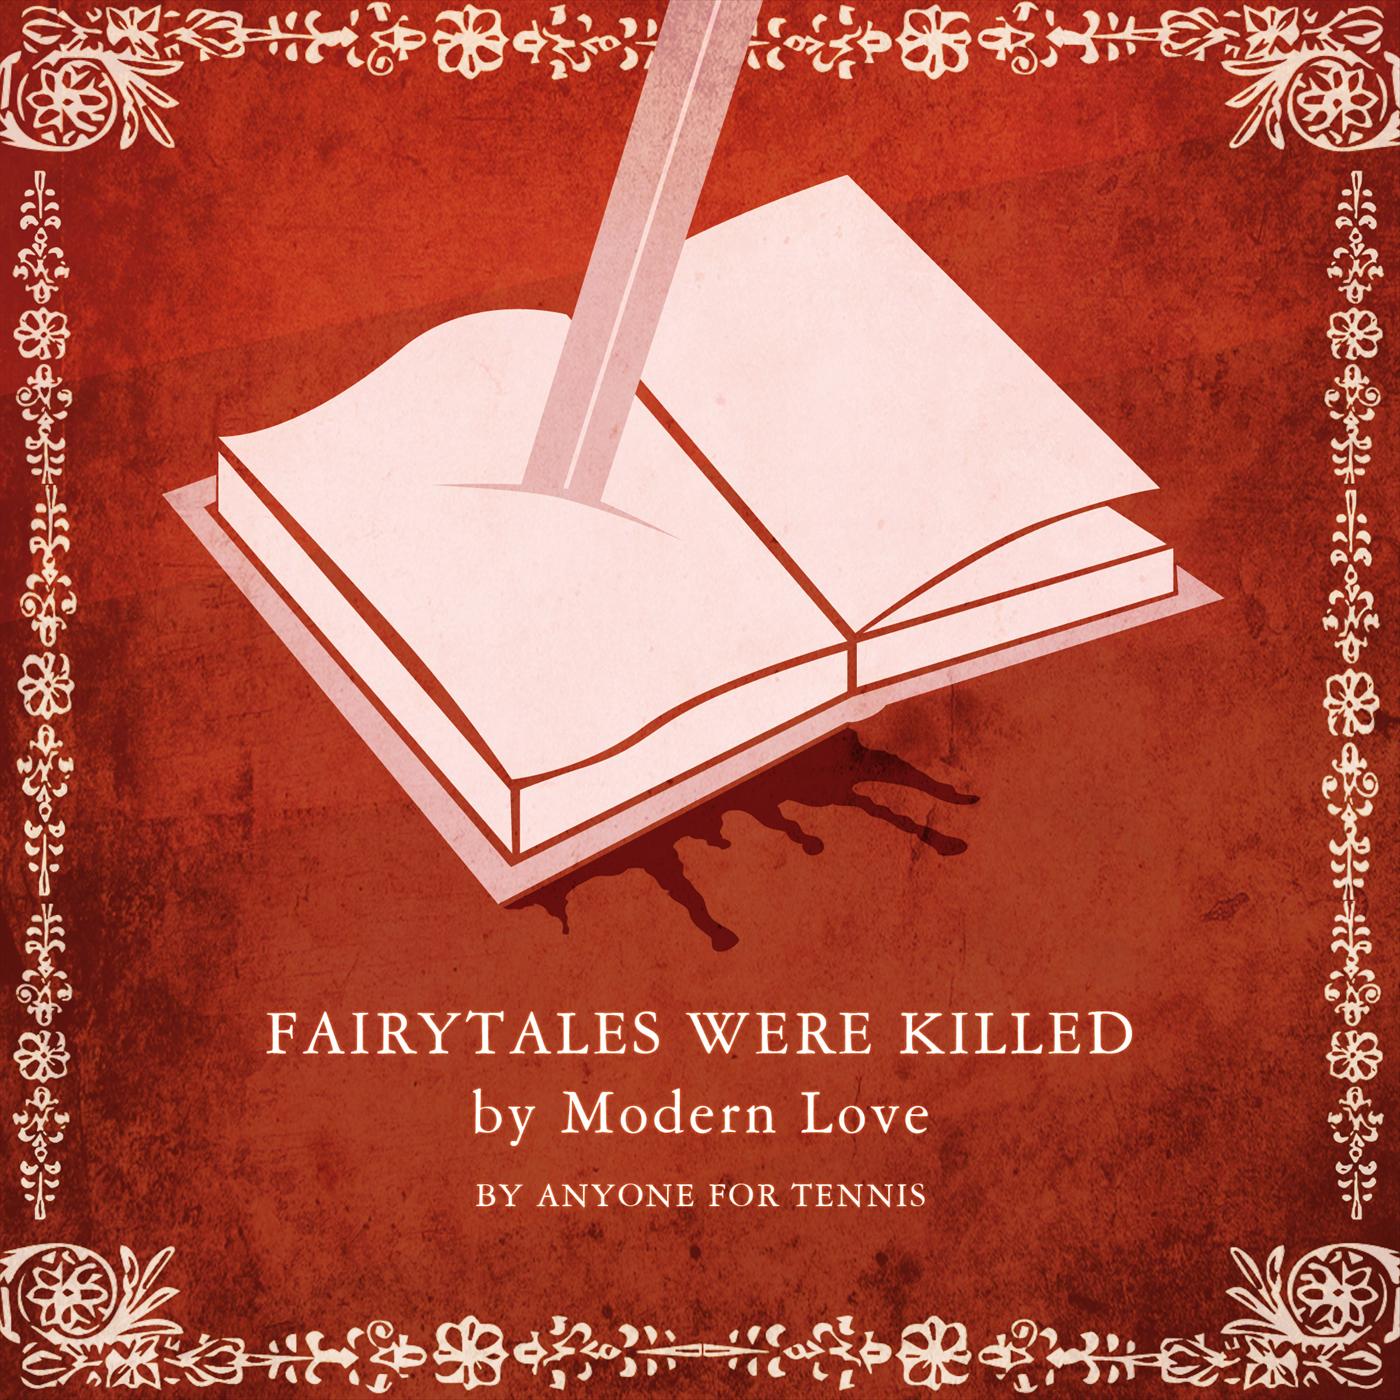 Fairytales were killed by modern love